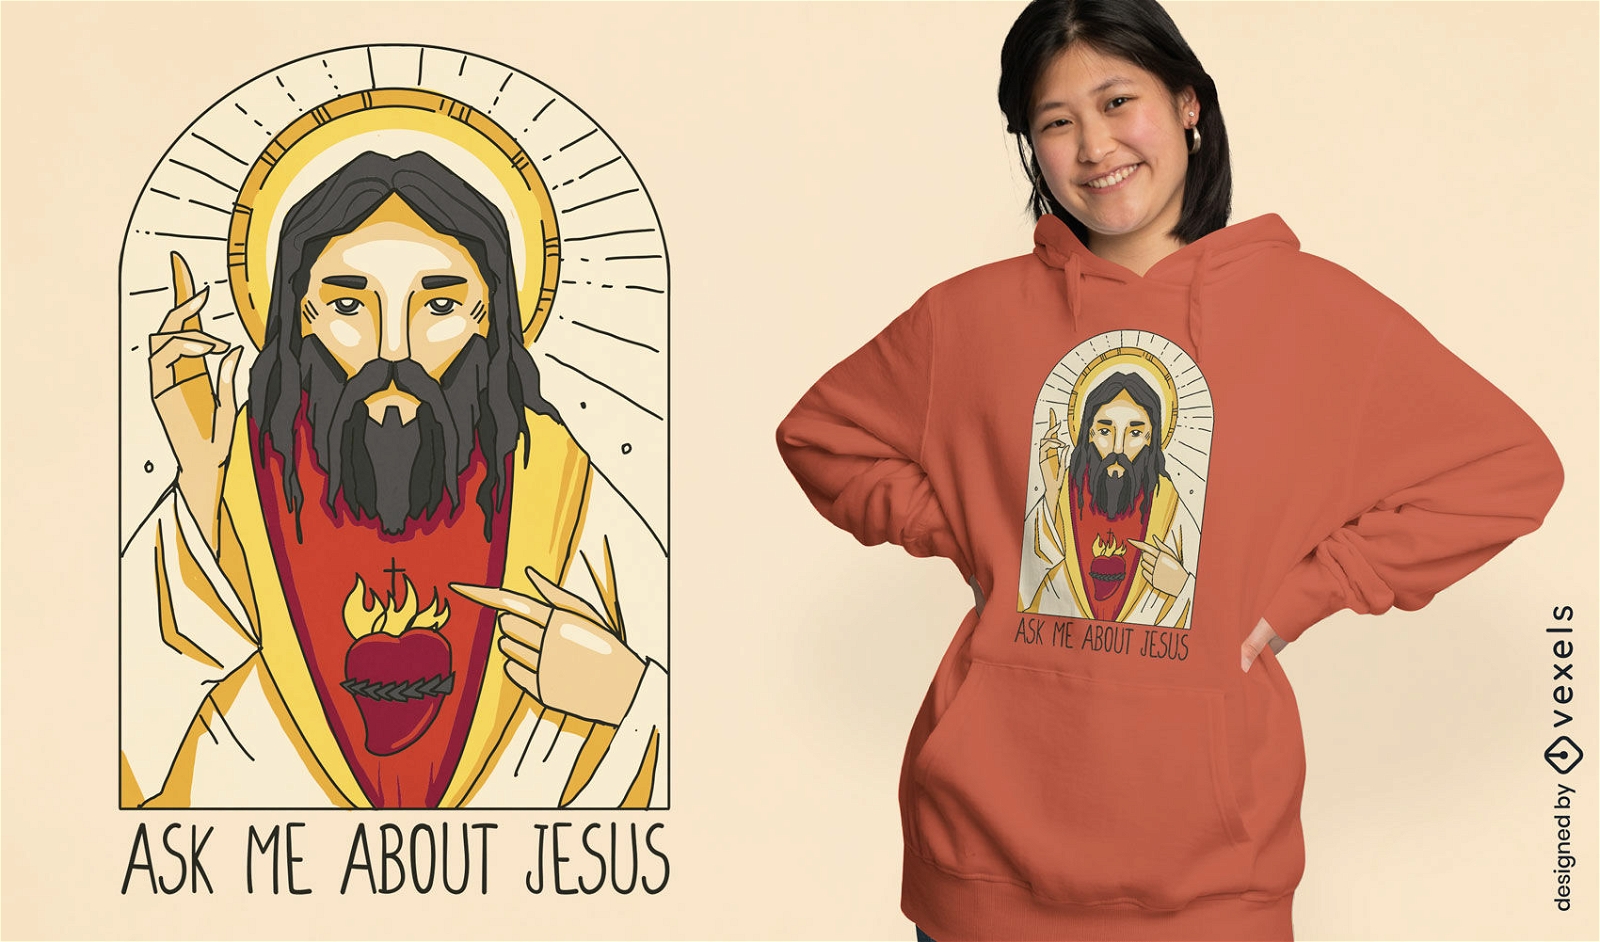 Diseño de camiseta de imagen religiosa de Jesús.